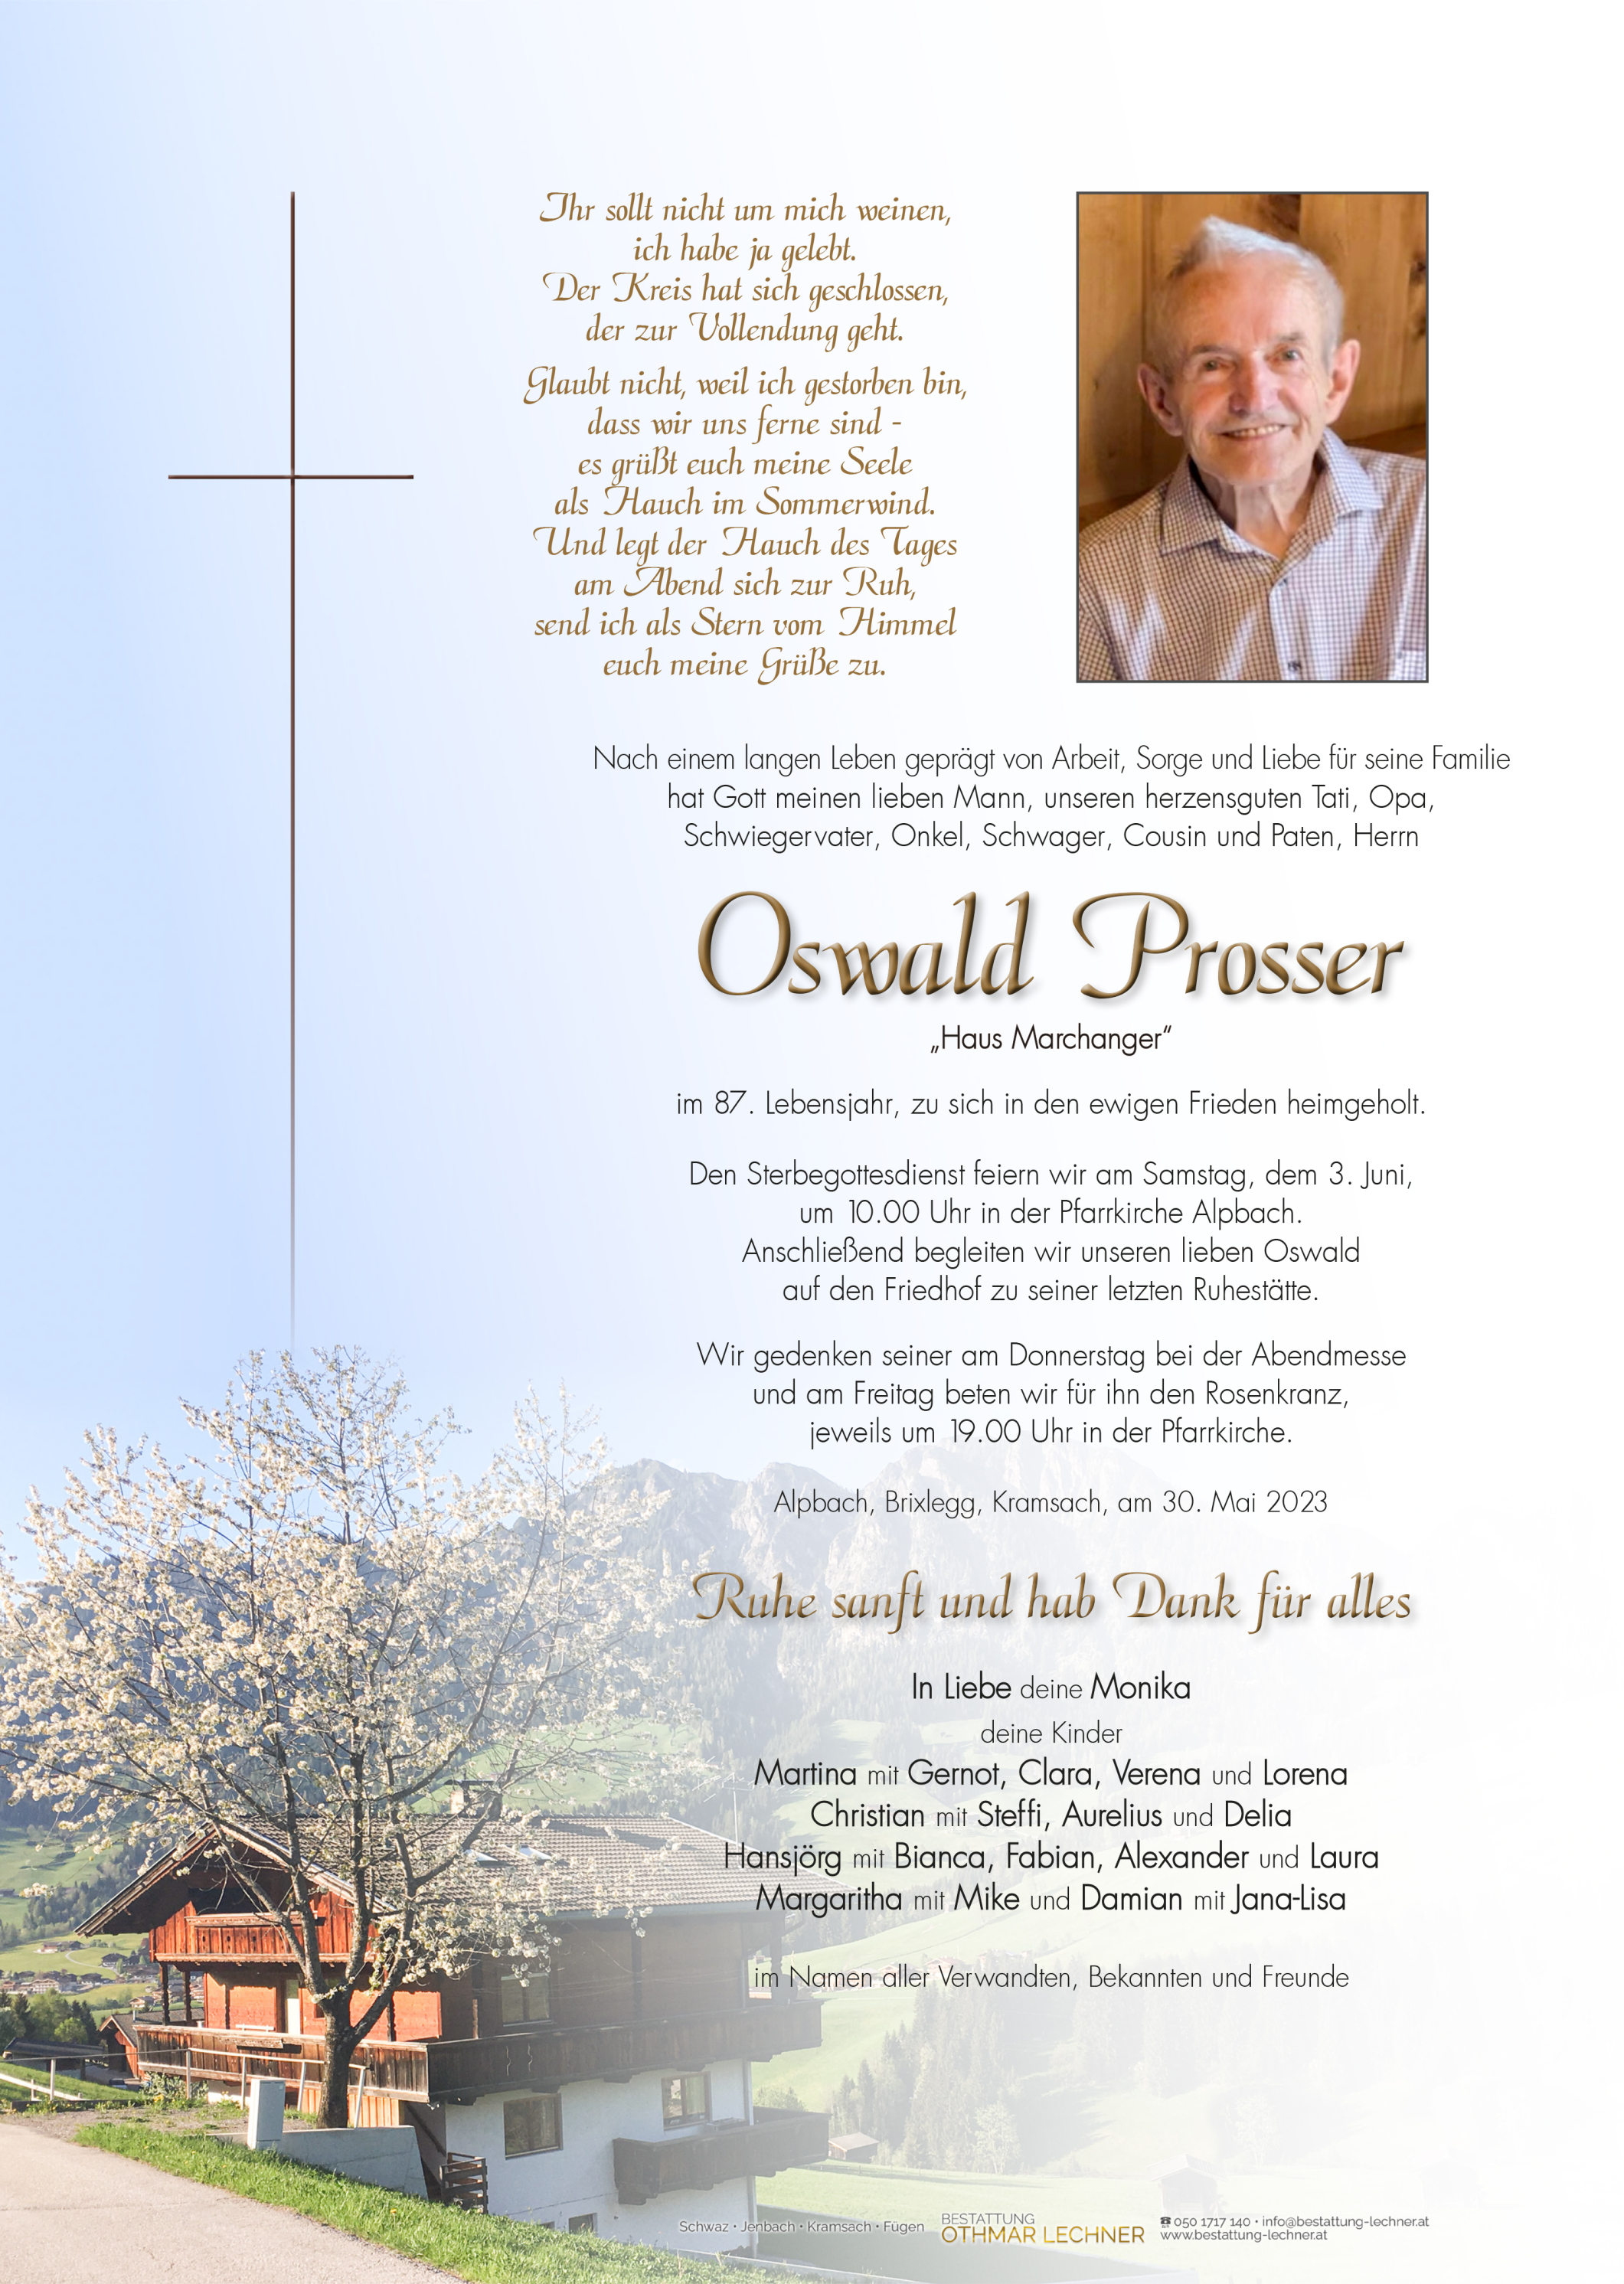 Oswald Prosser